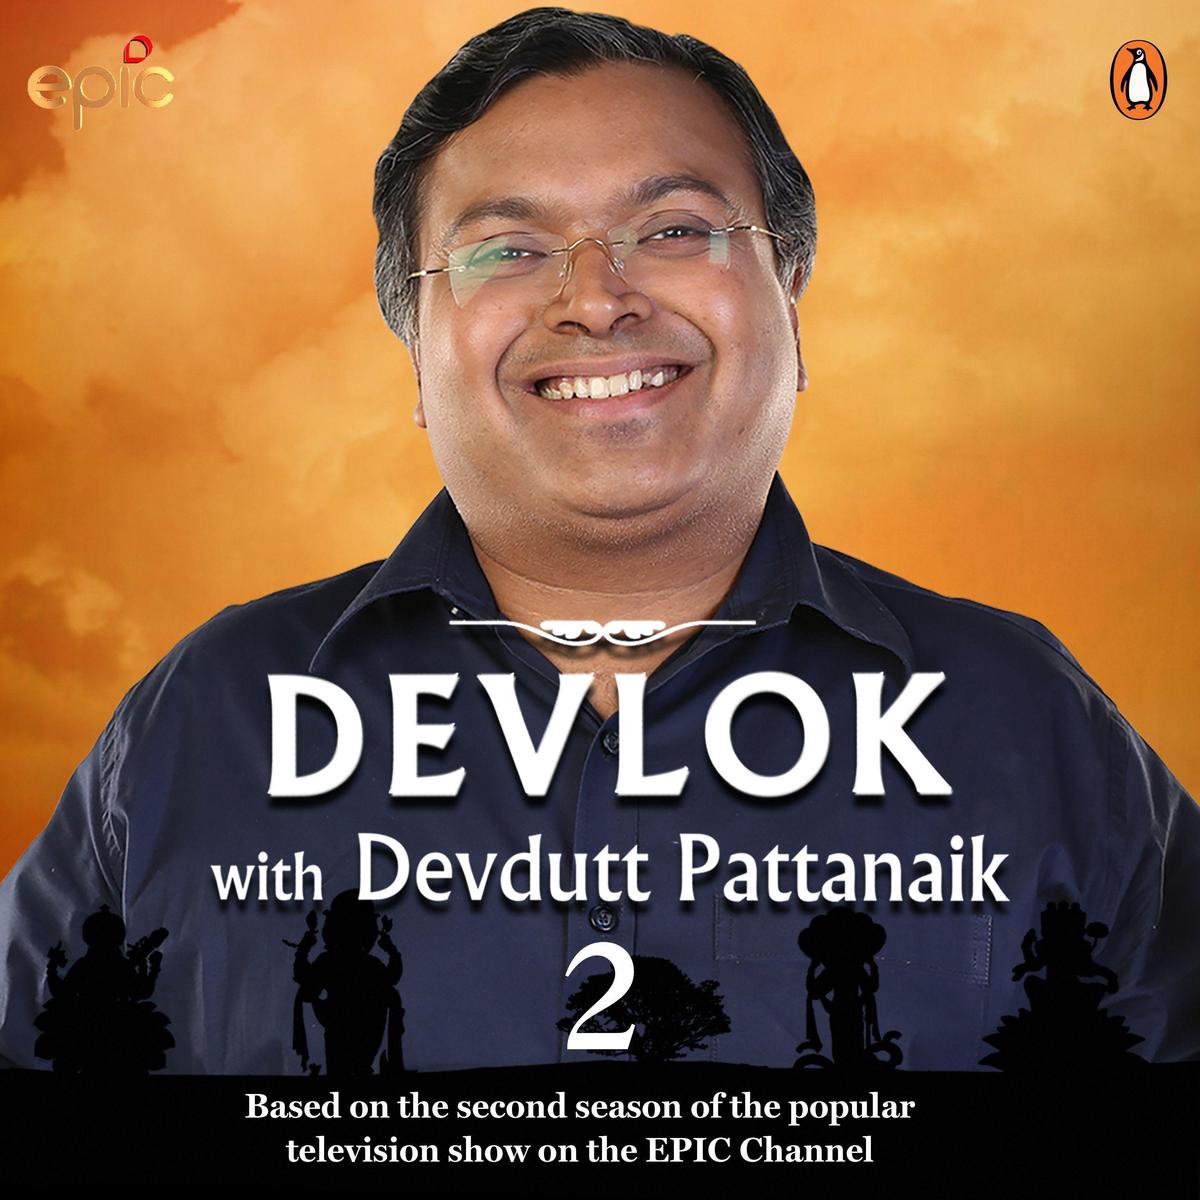 Devlok 2 - Devdutt Pattanaik